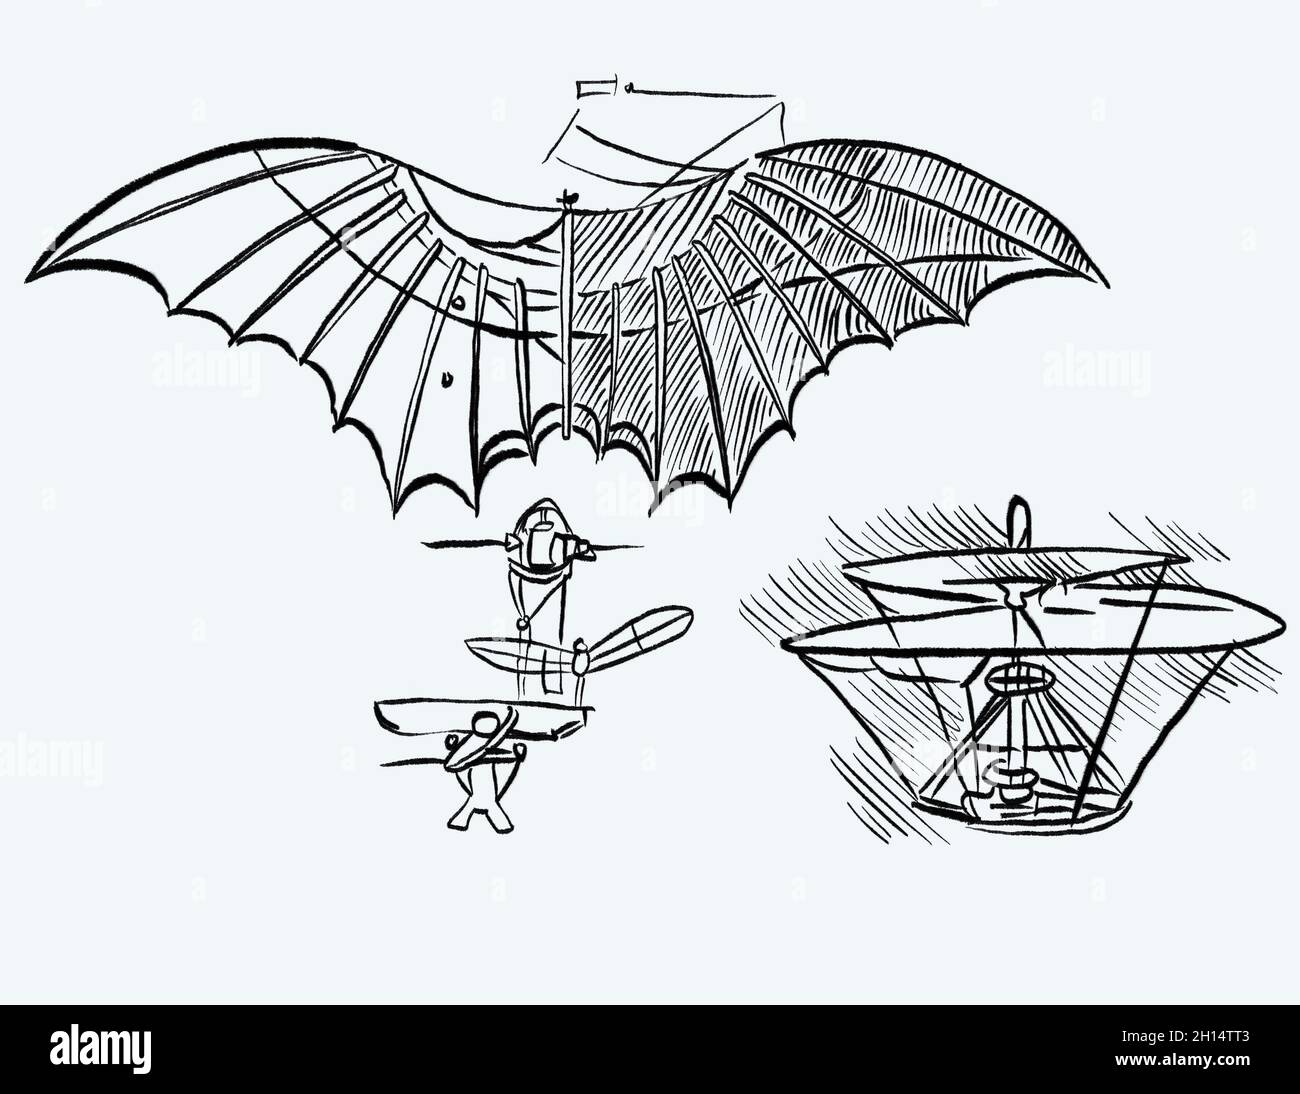 Leonardo Da Vinci's flying machine illustration Stock Photo